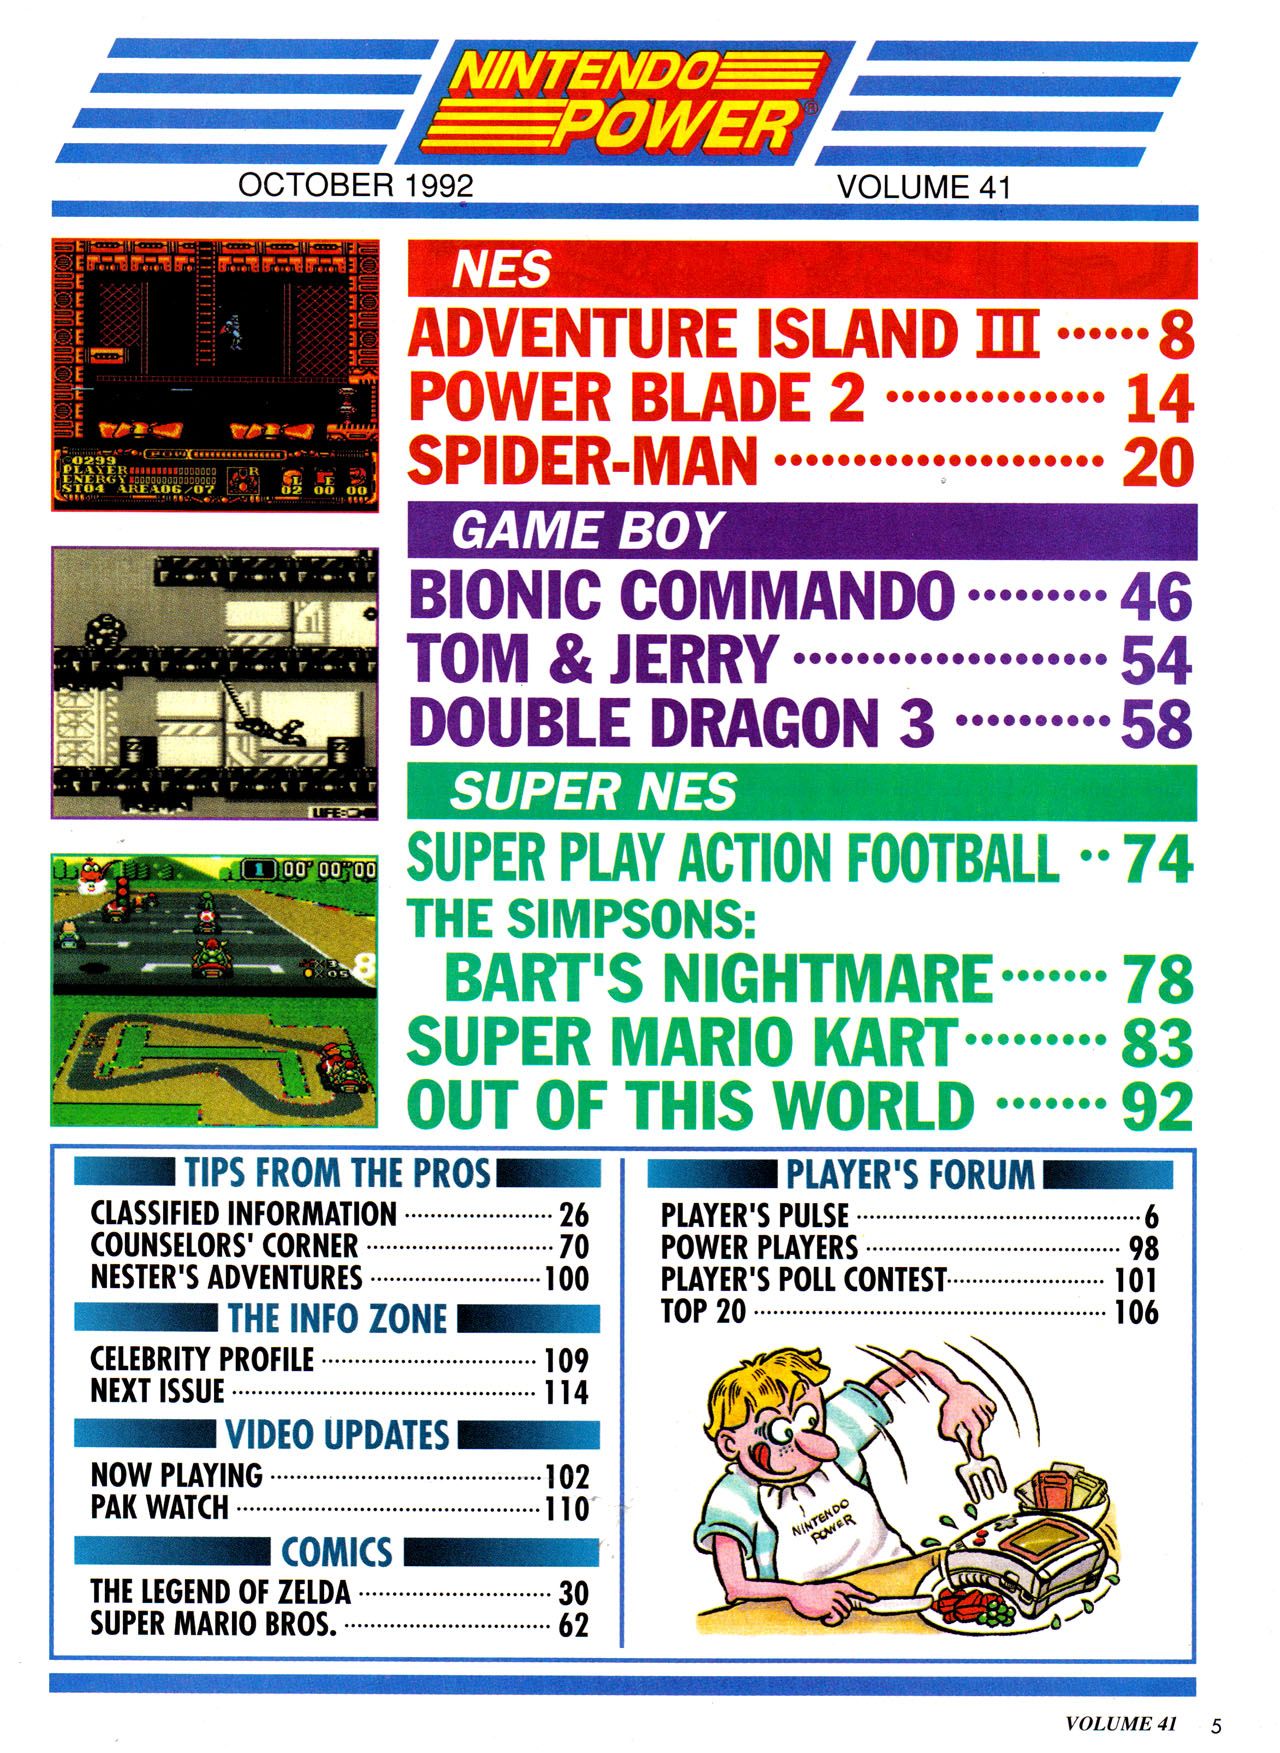 Read online Nintendo Power comic -  Issue #41 - 8